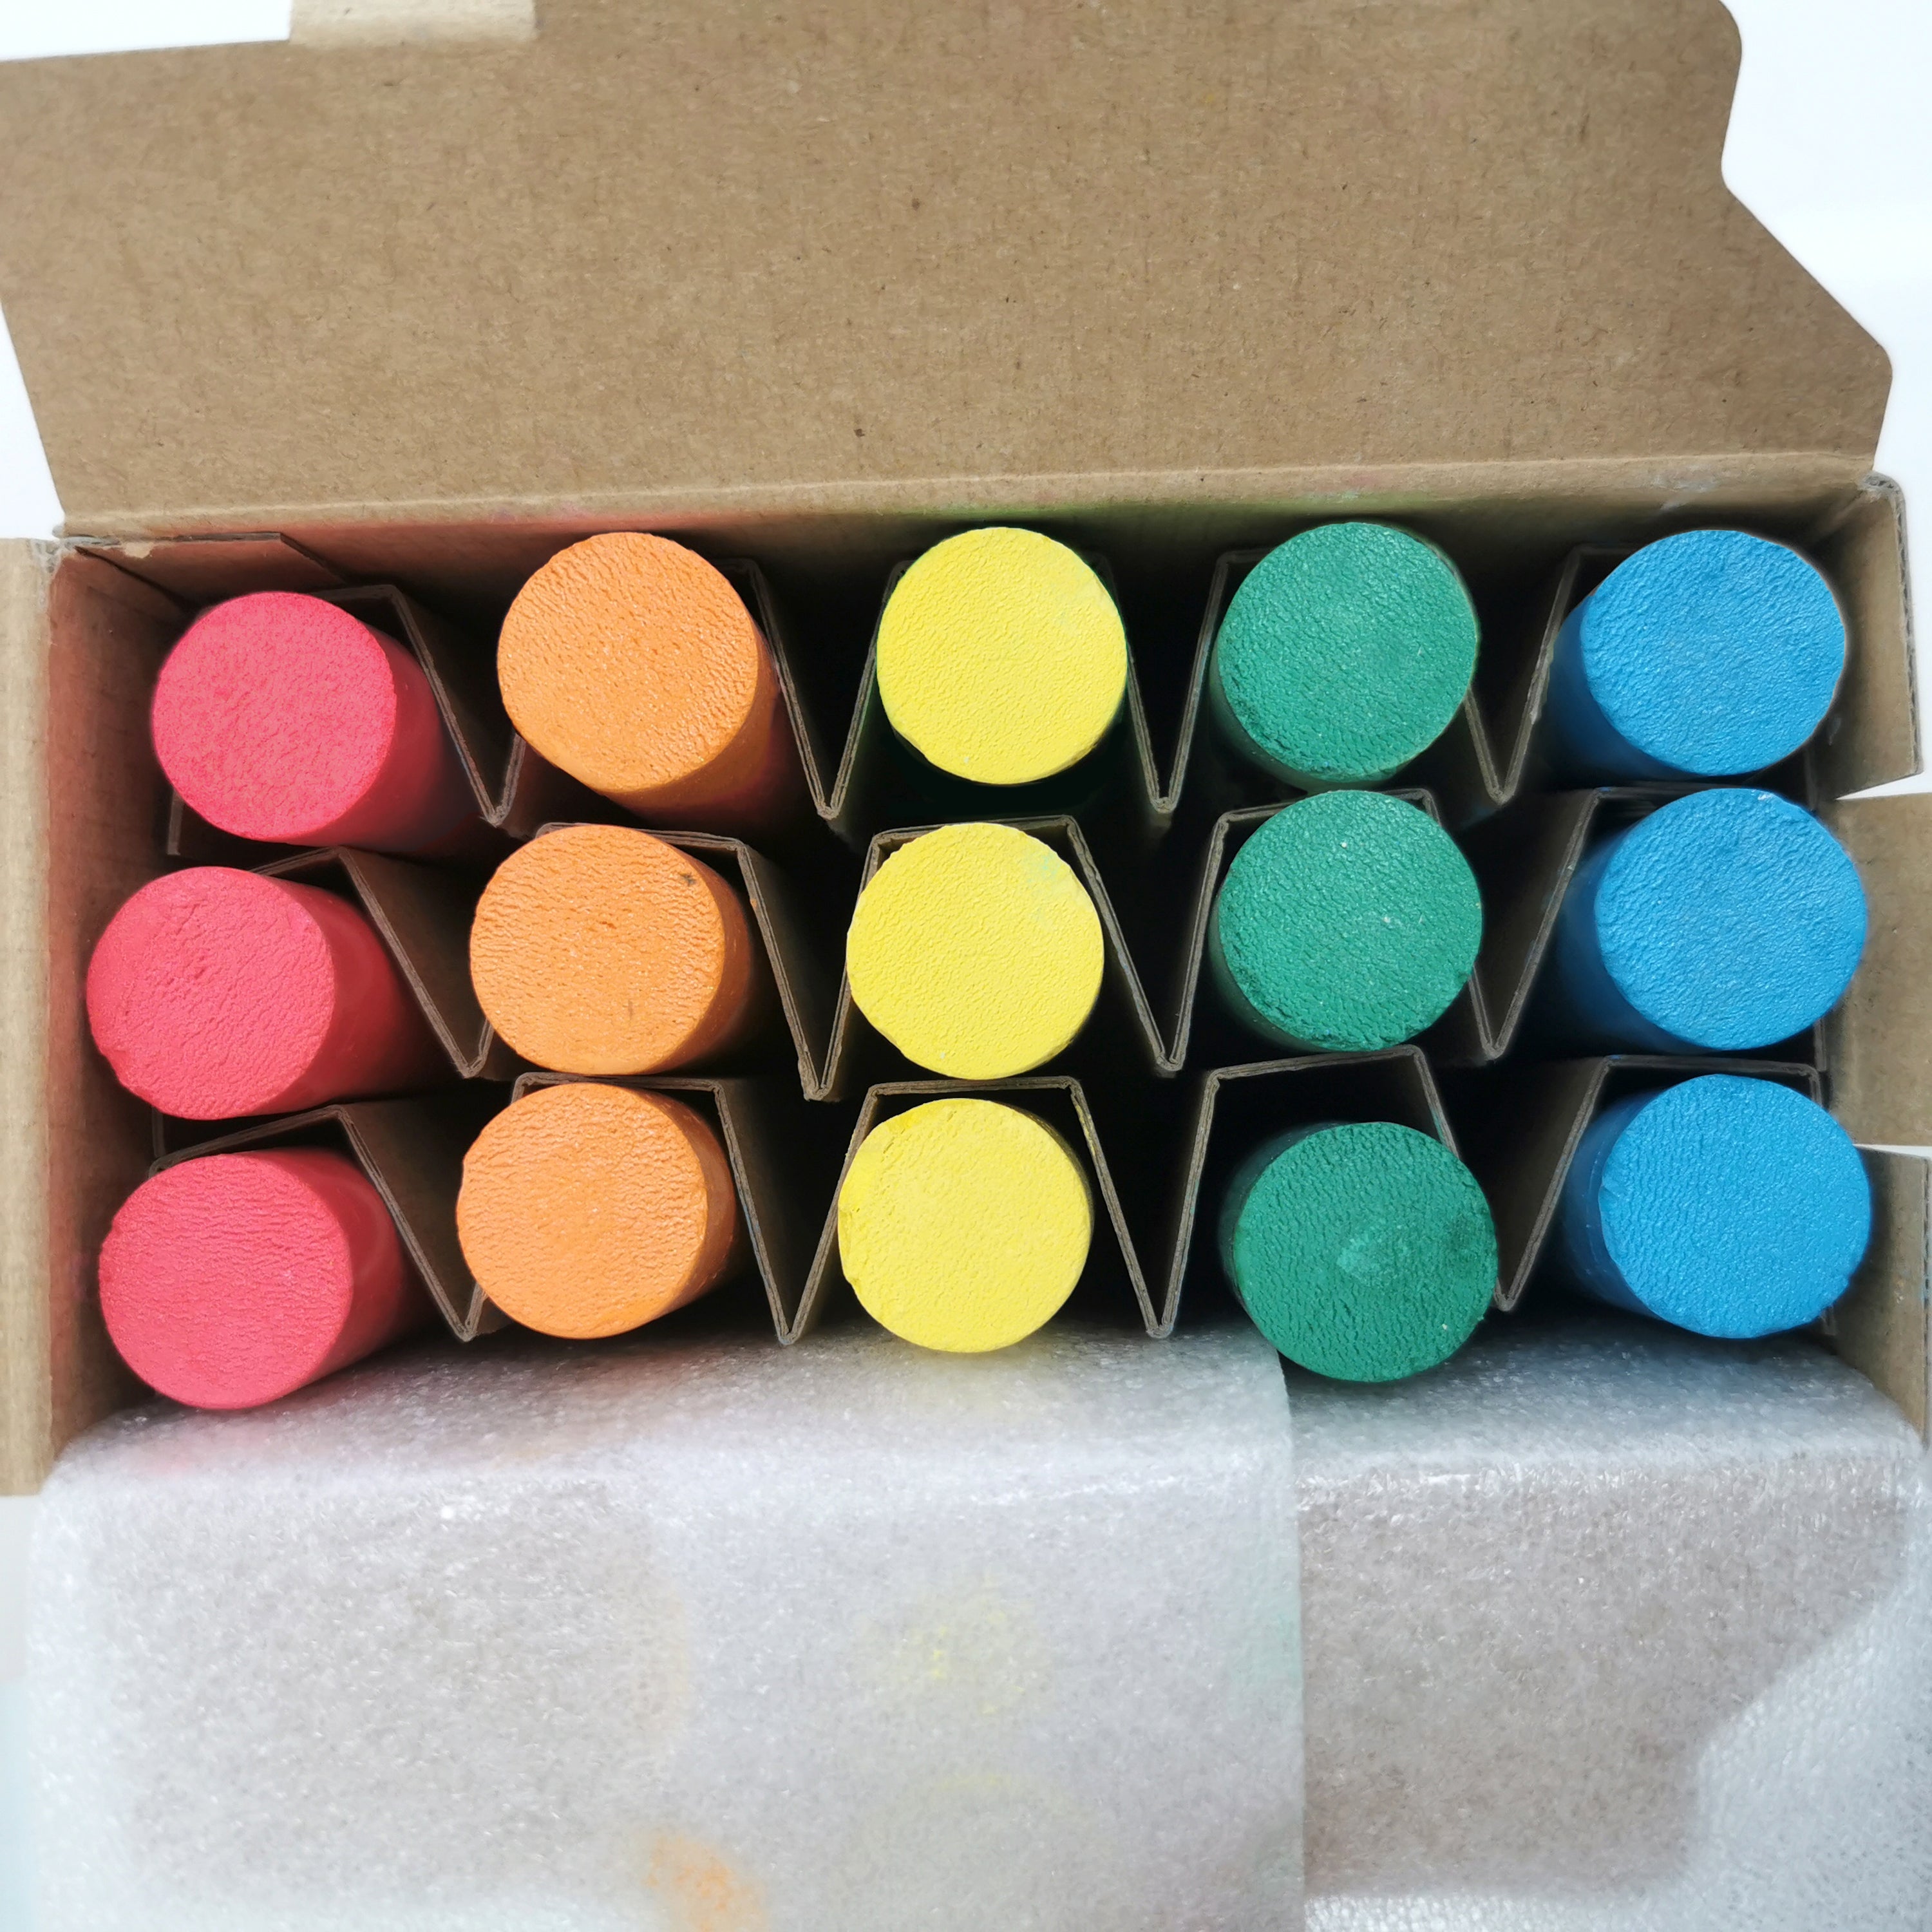 HAGOROMO Fulltouch Large Chalk 5 Colors 15 PCS - hagoromo.shop